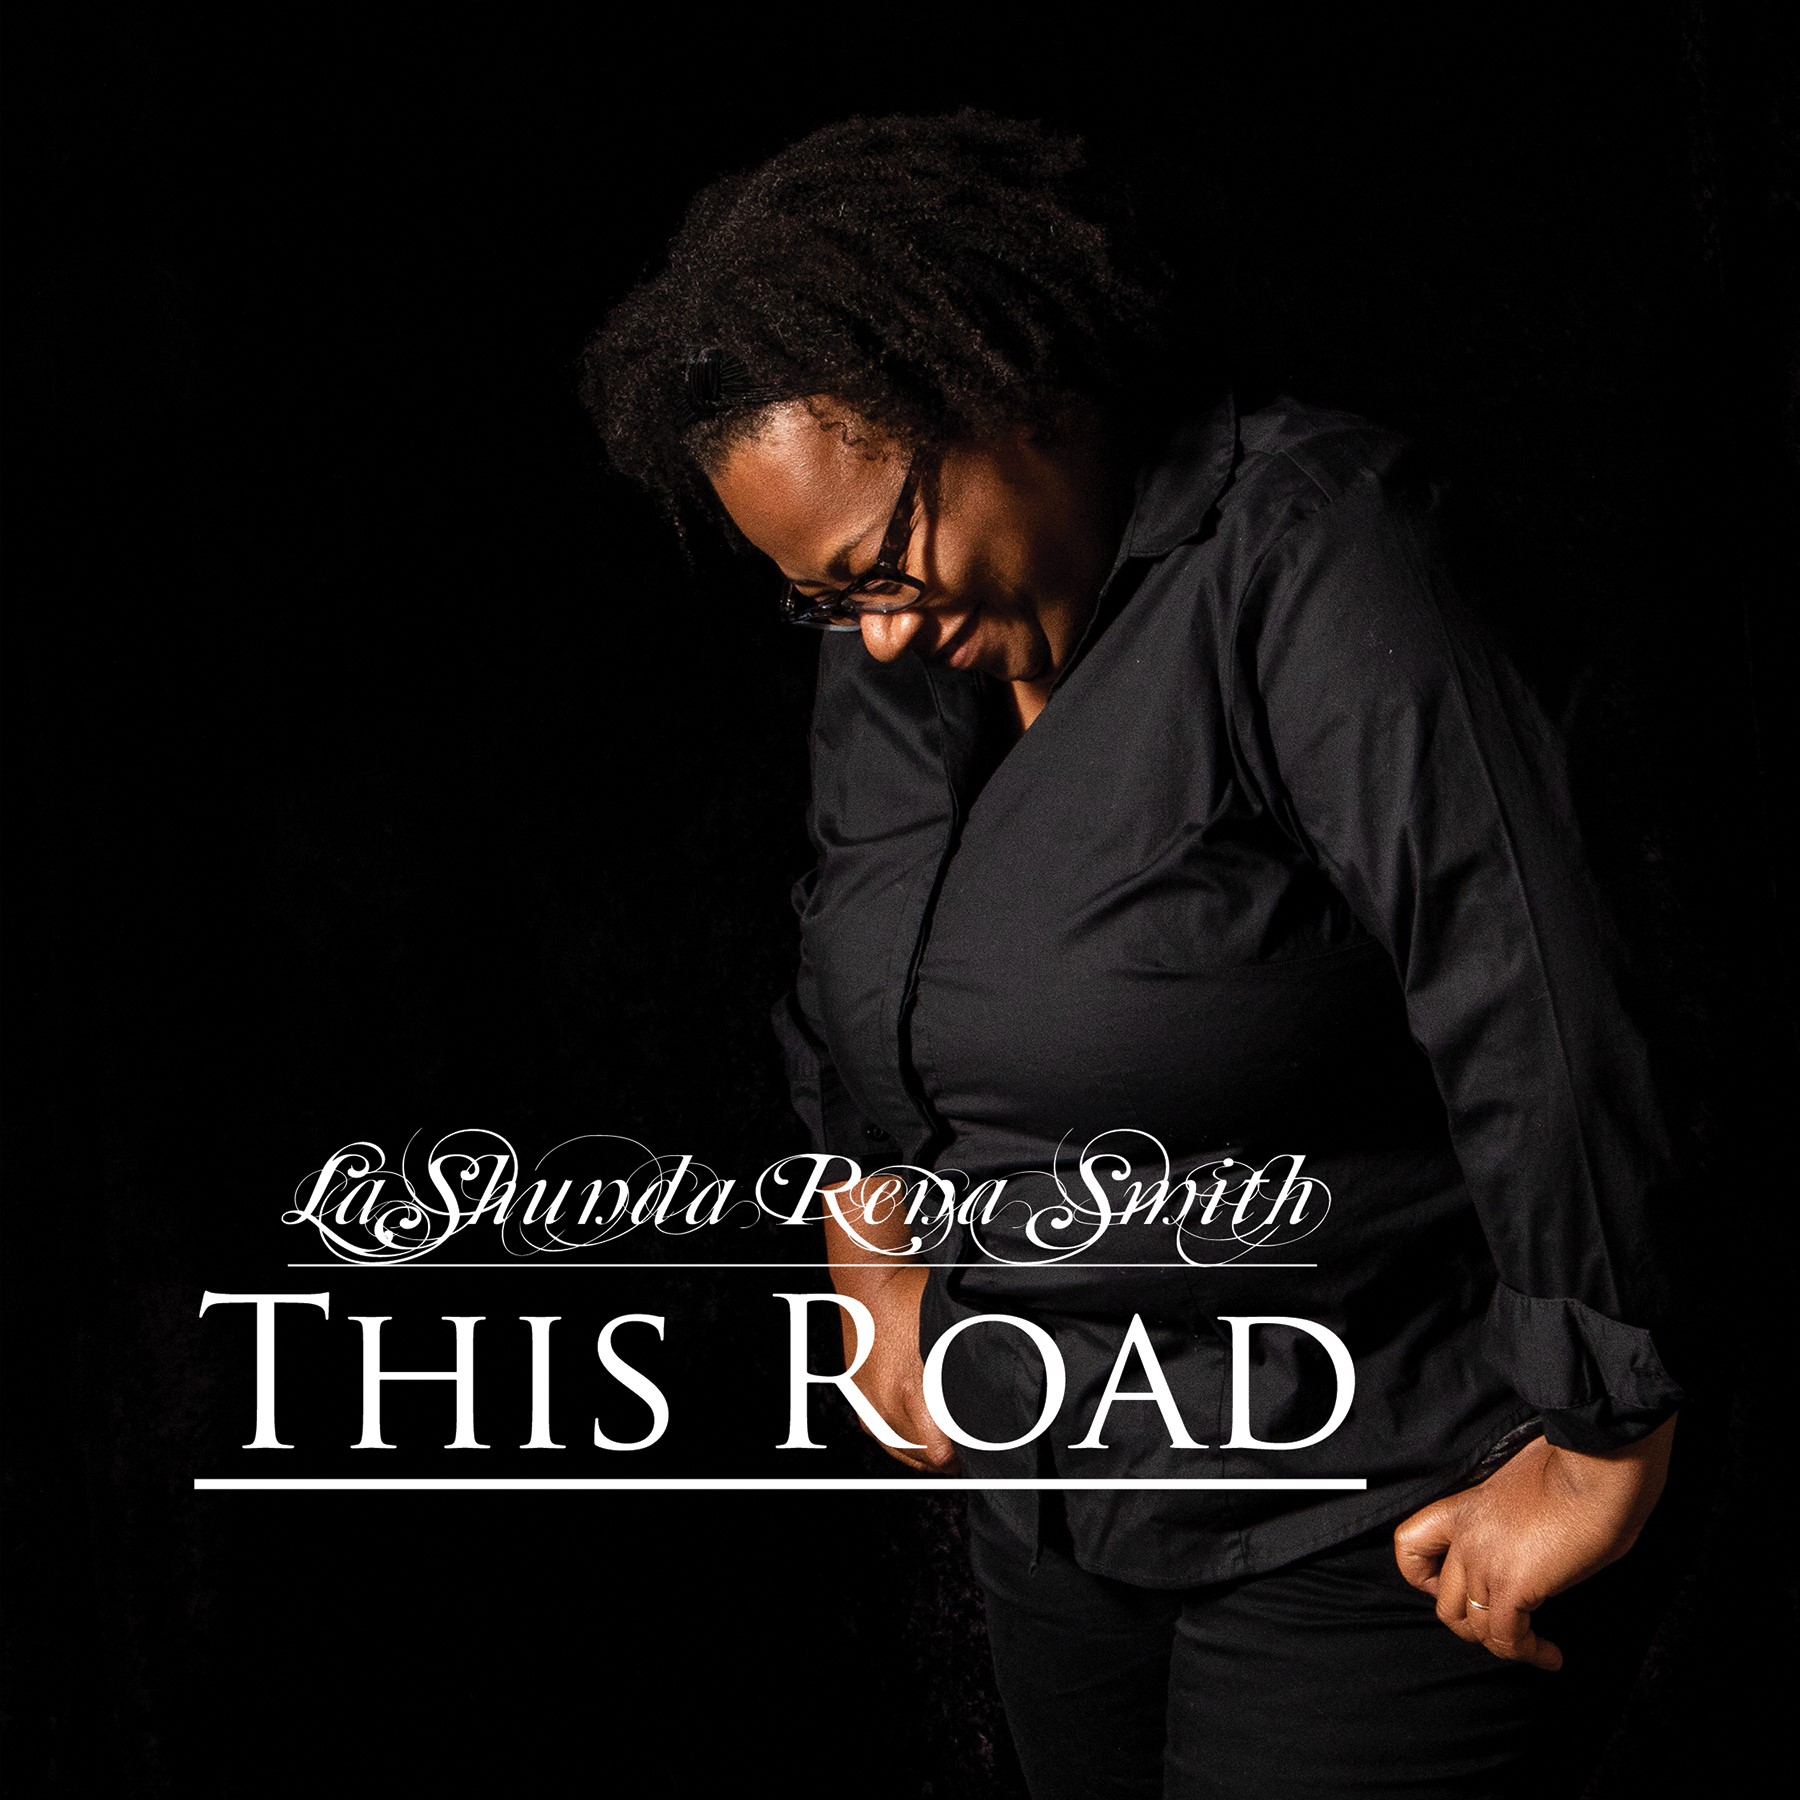 Album Cover - "This Road" by LaShunda Rena Smith